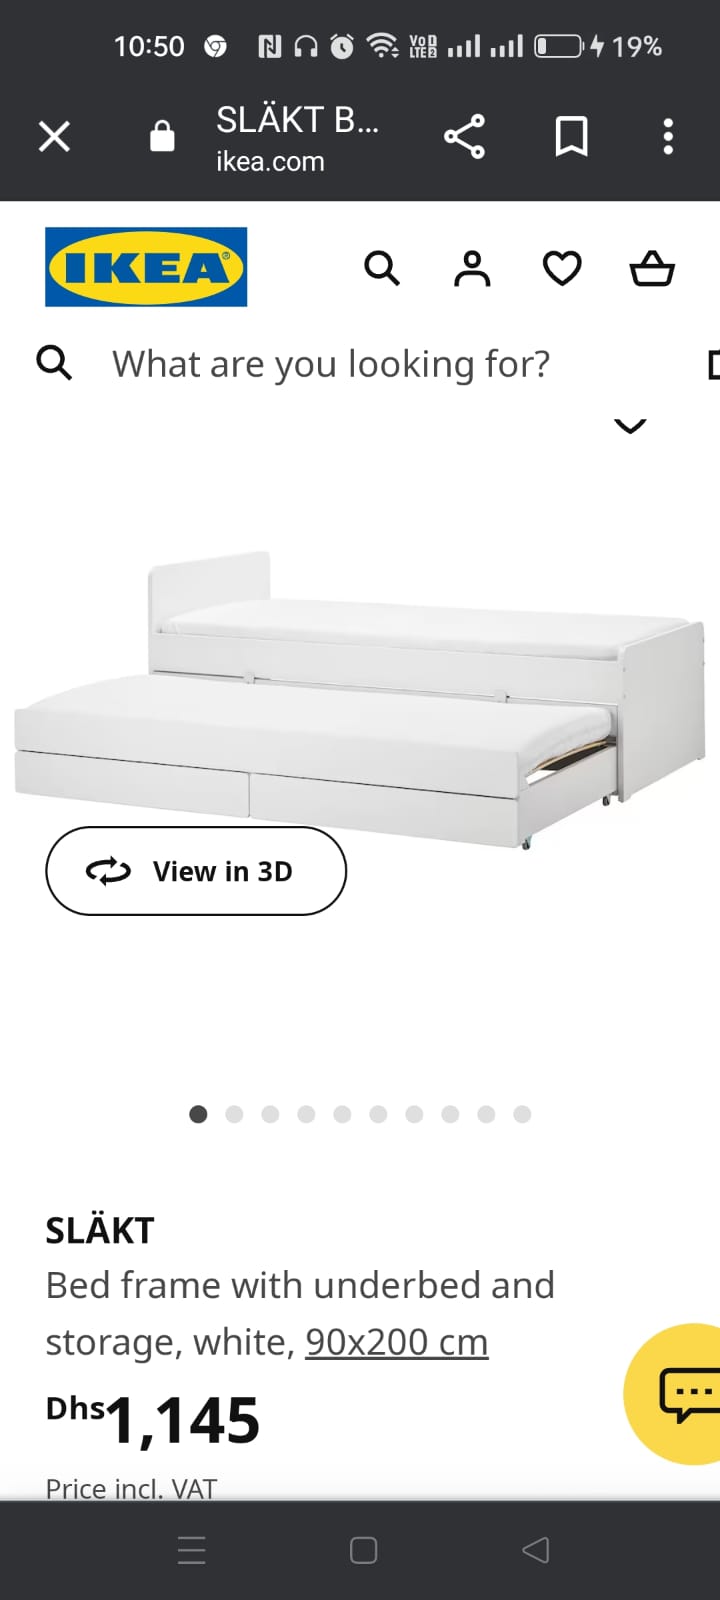 IKEA slakt bed frame